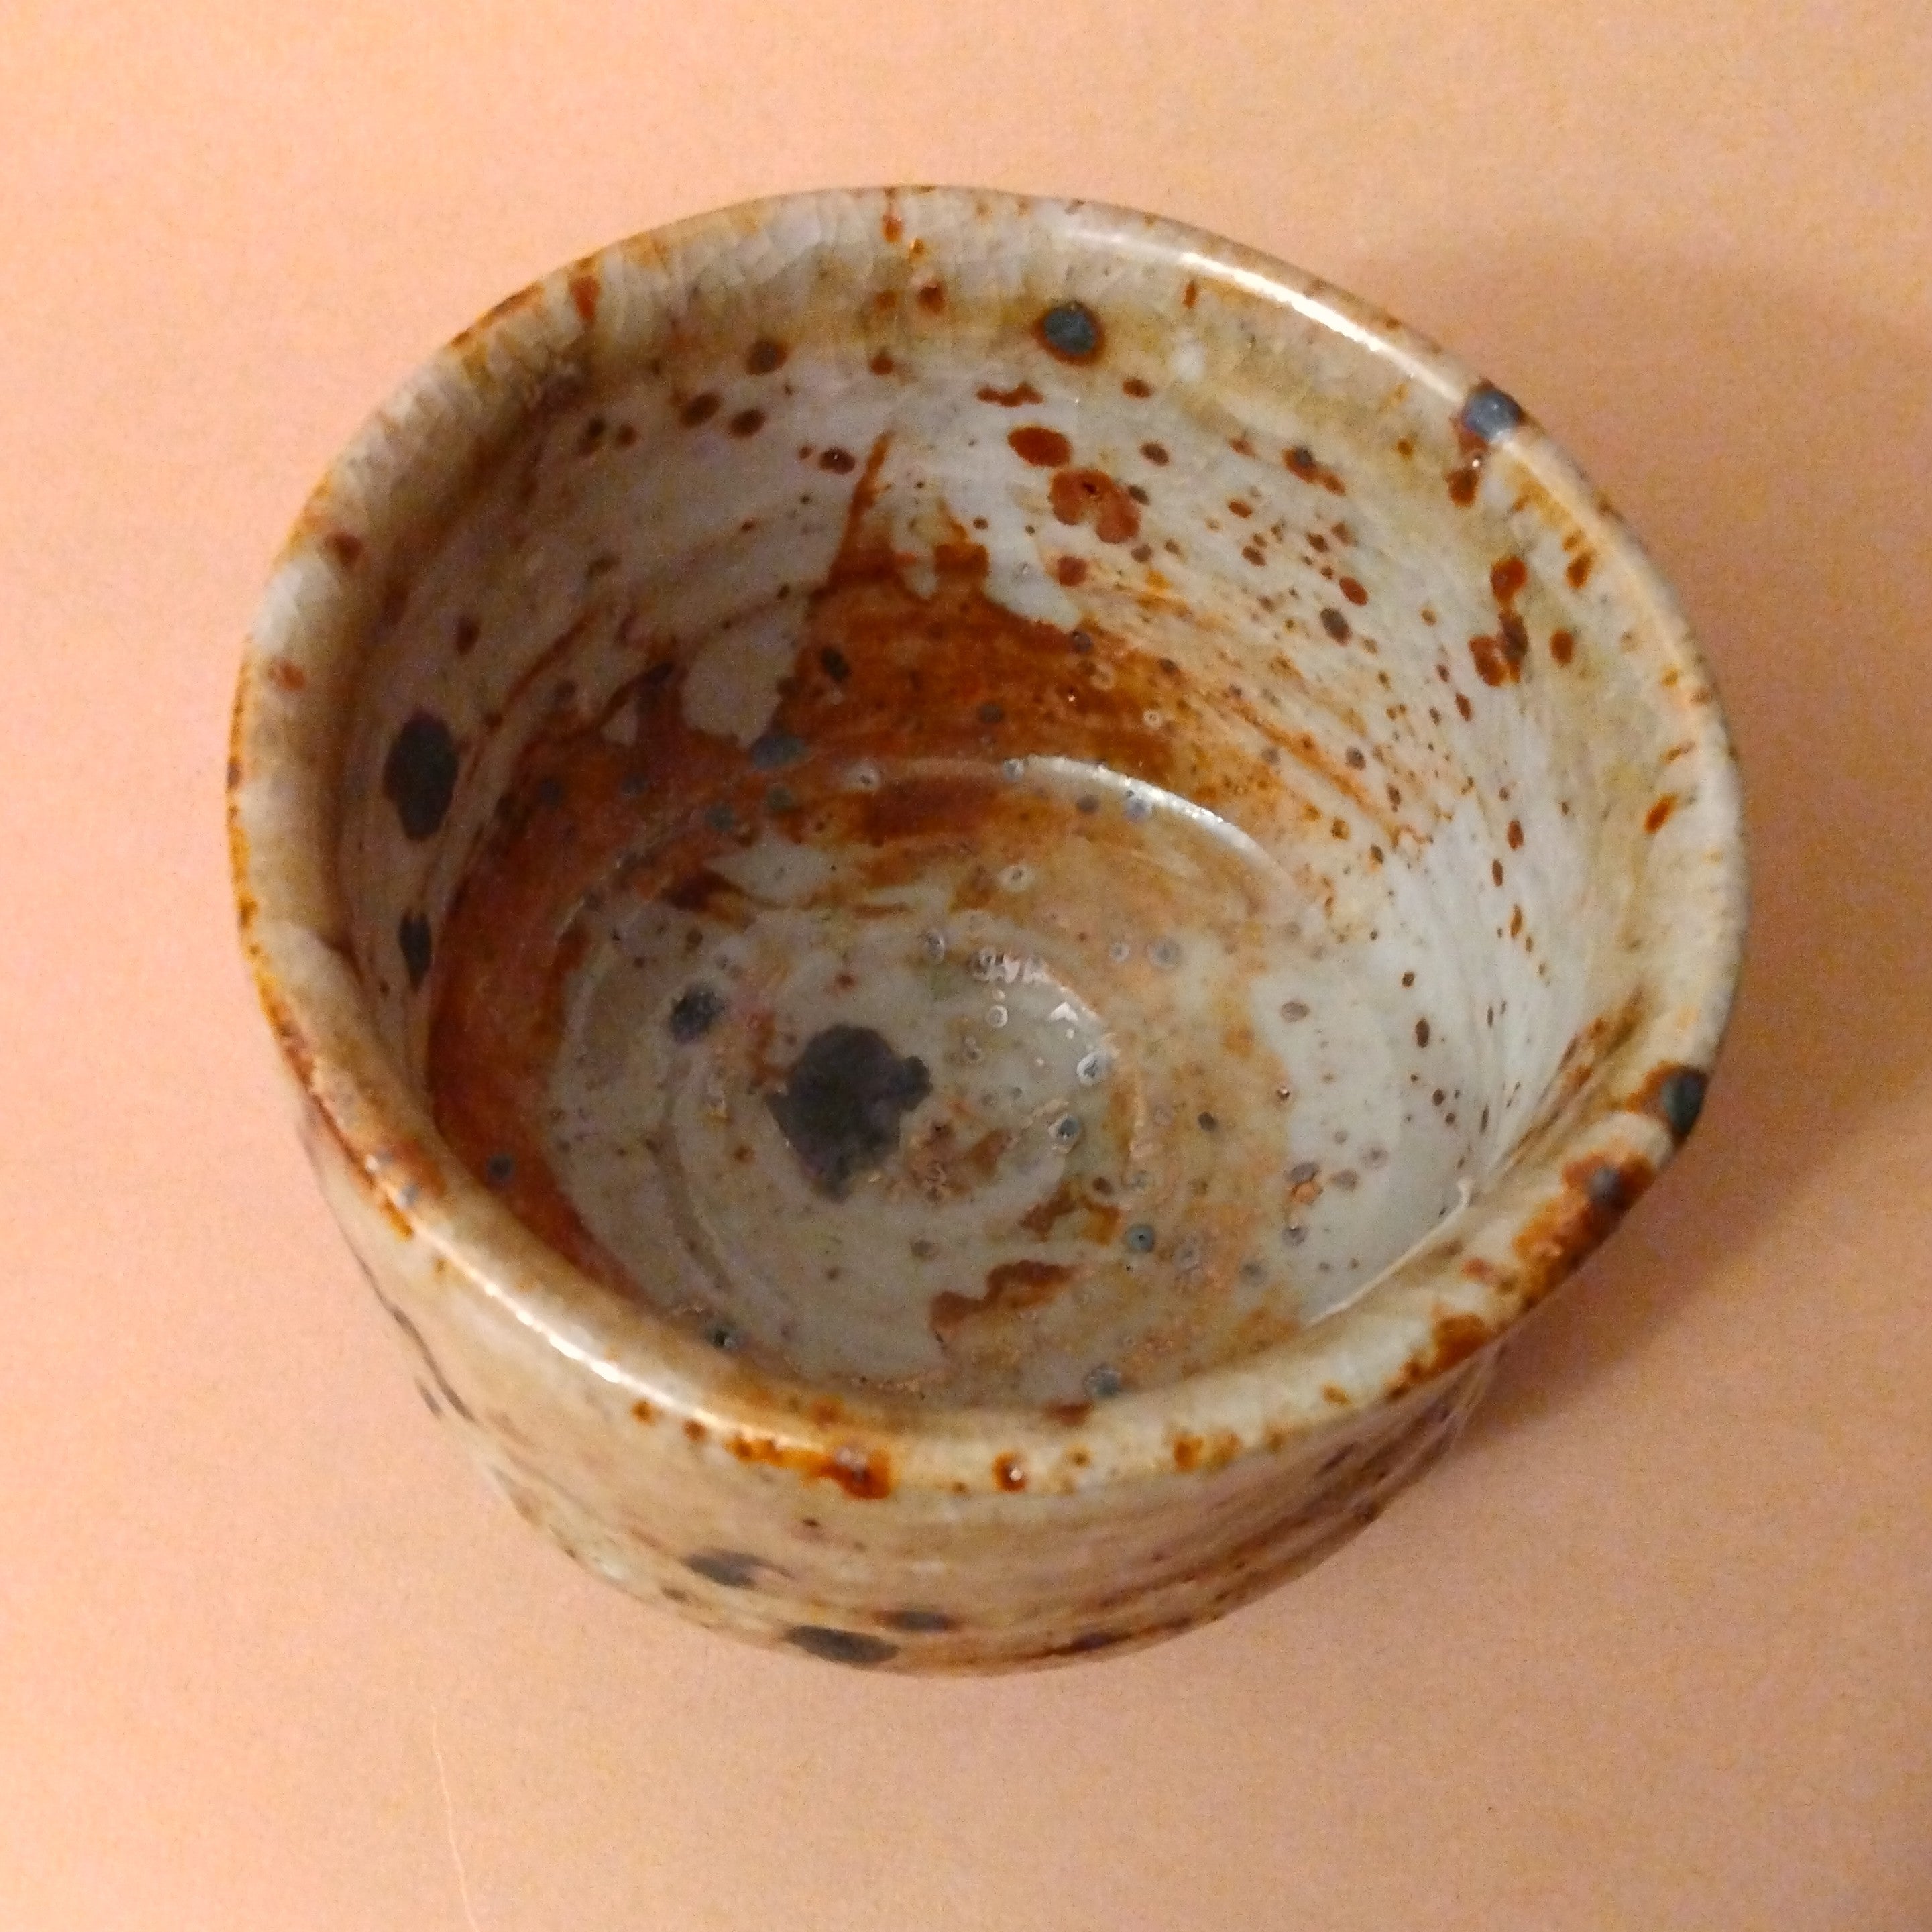 Shino Glaze Tea Bowl, Matcha Chawan by George Gledhill